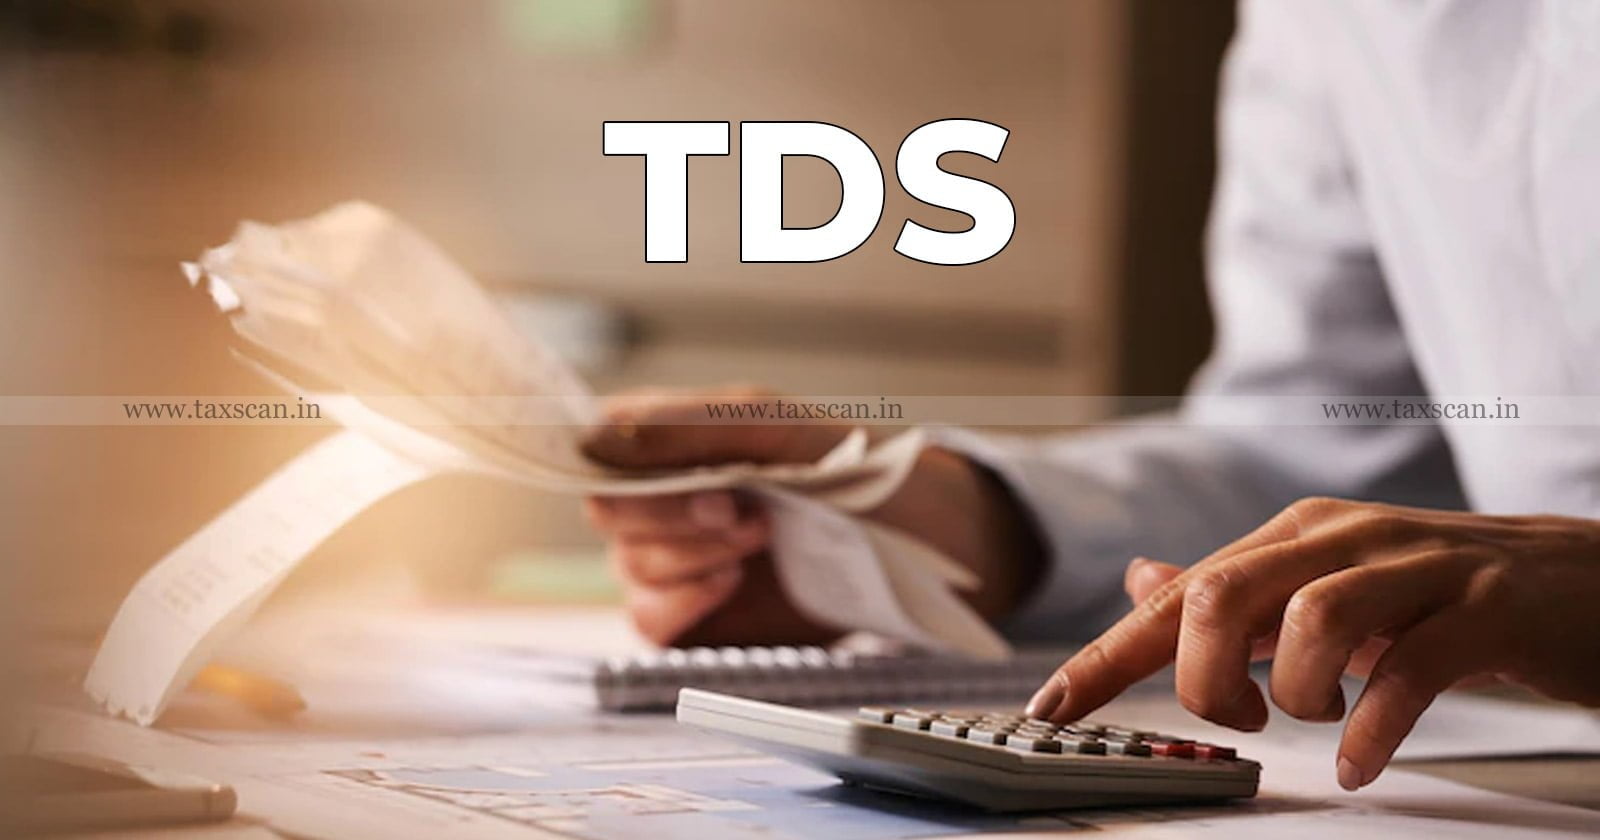 ITAT - ITAT Mumbai - Income Tax - TDS - TDS credit - taxscan